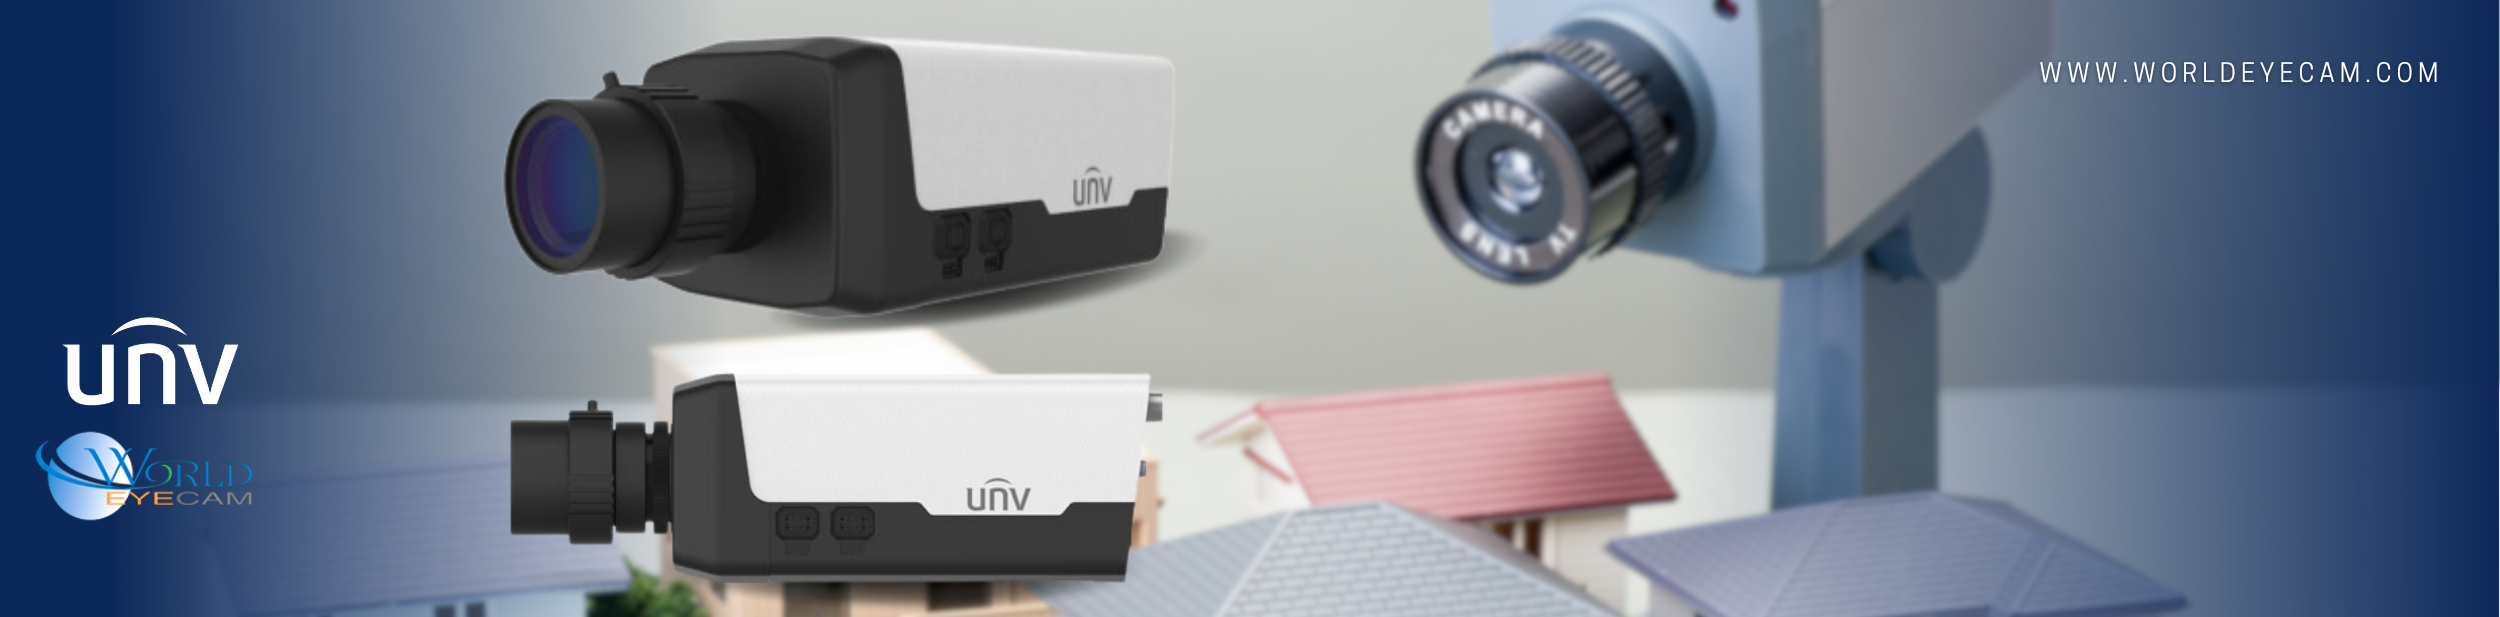 Box Type Uniview IP Cameras